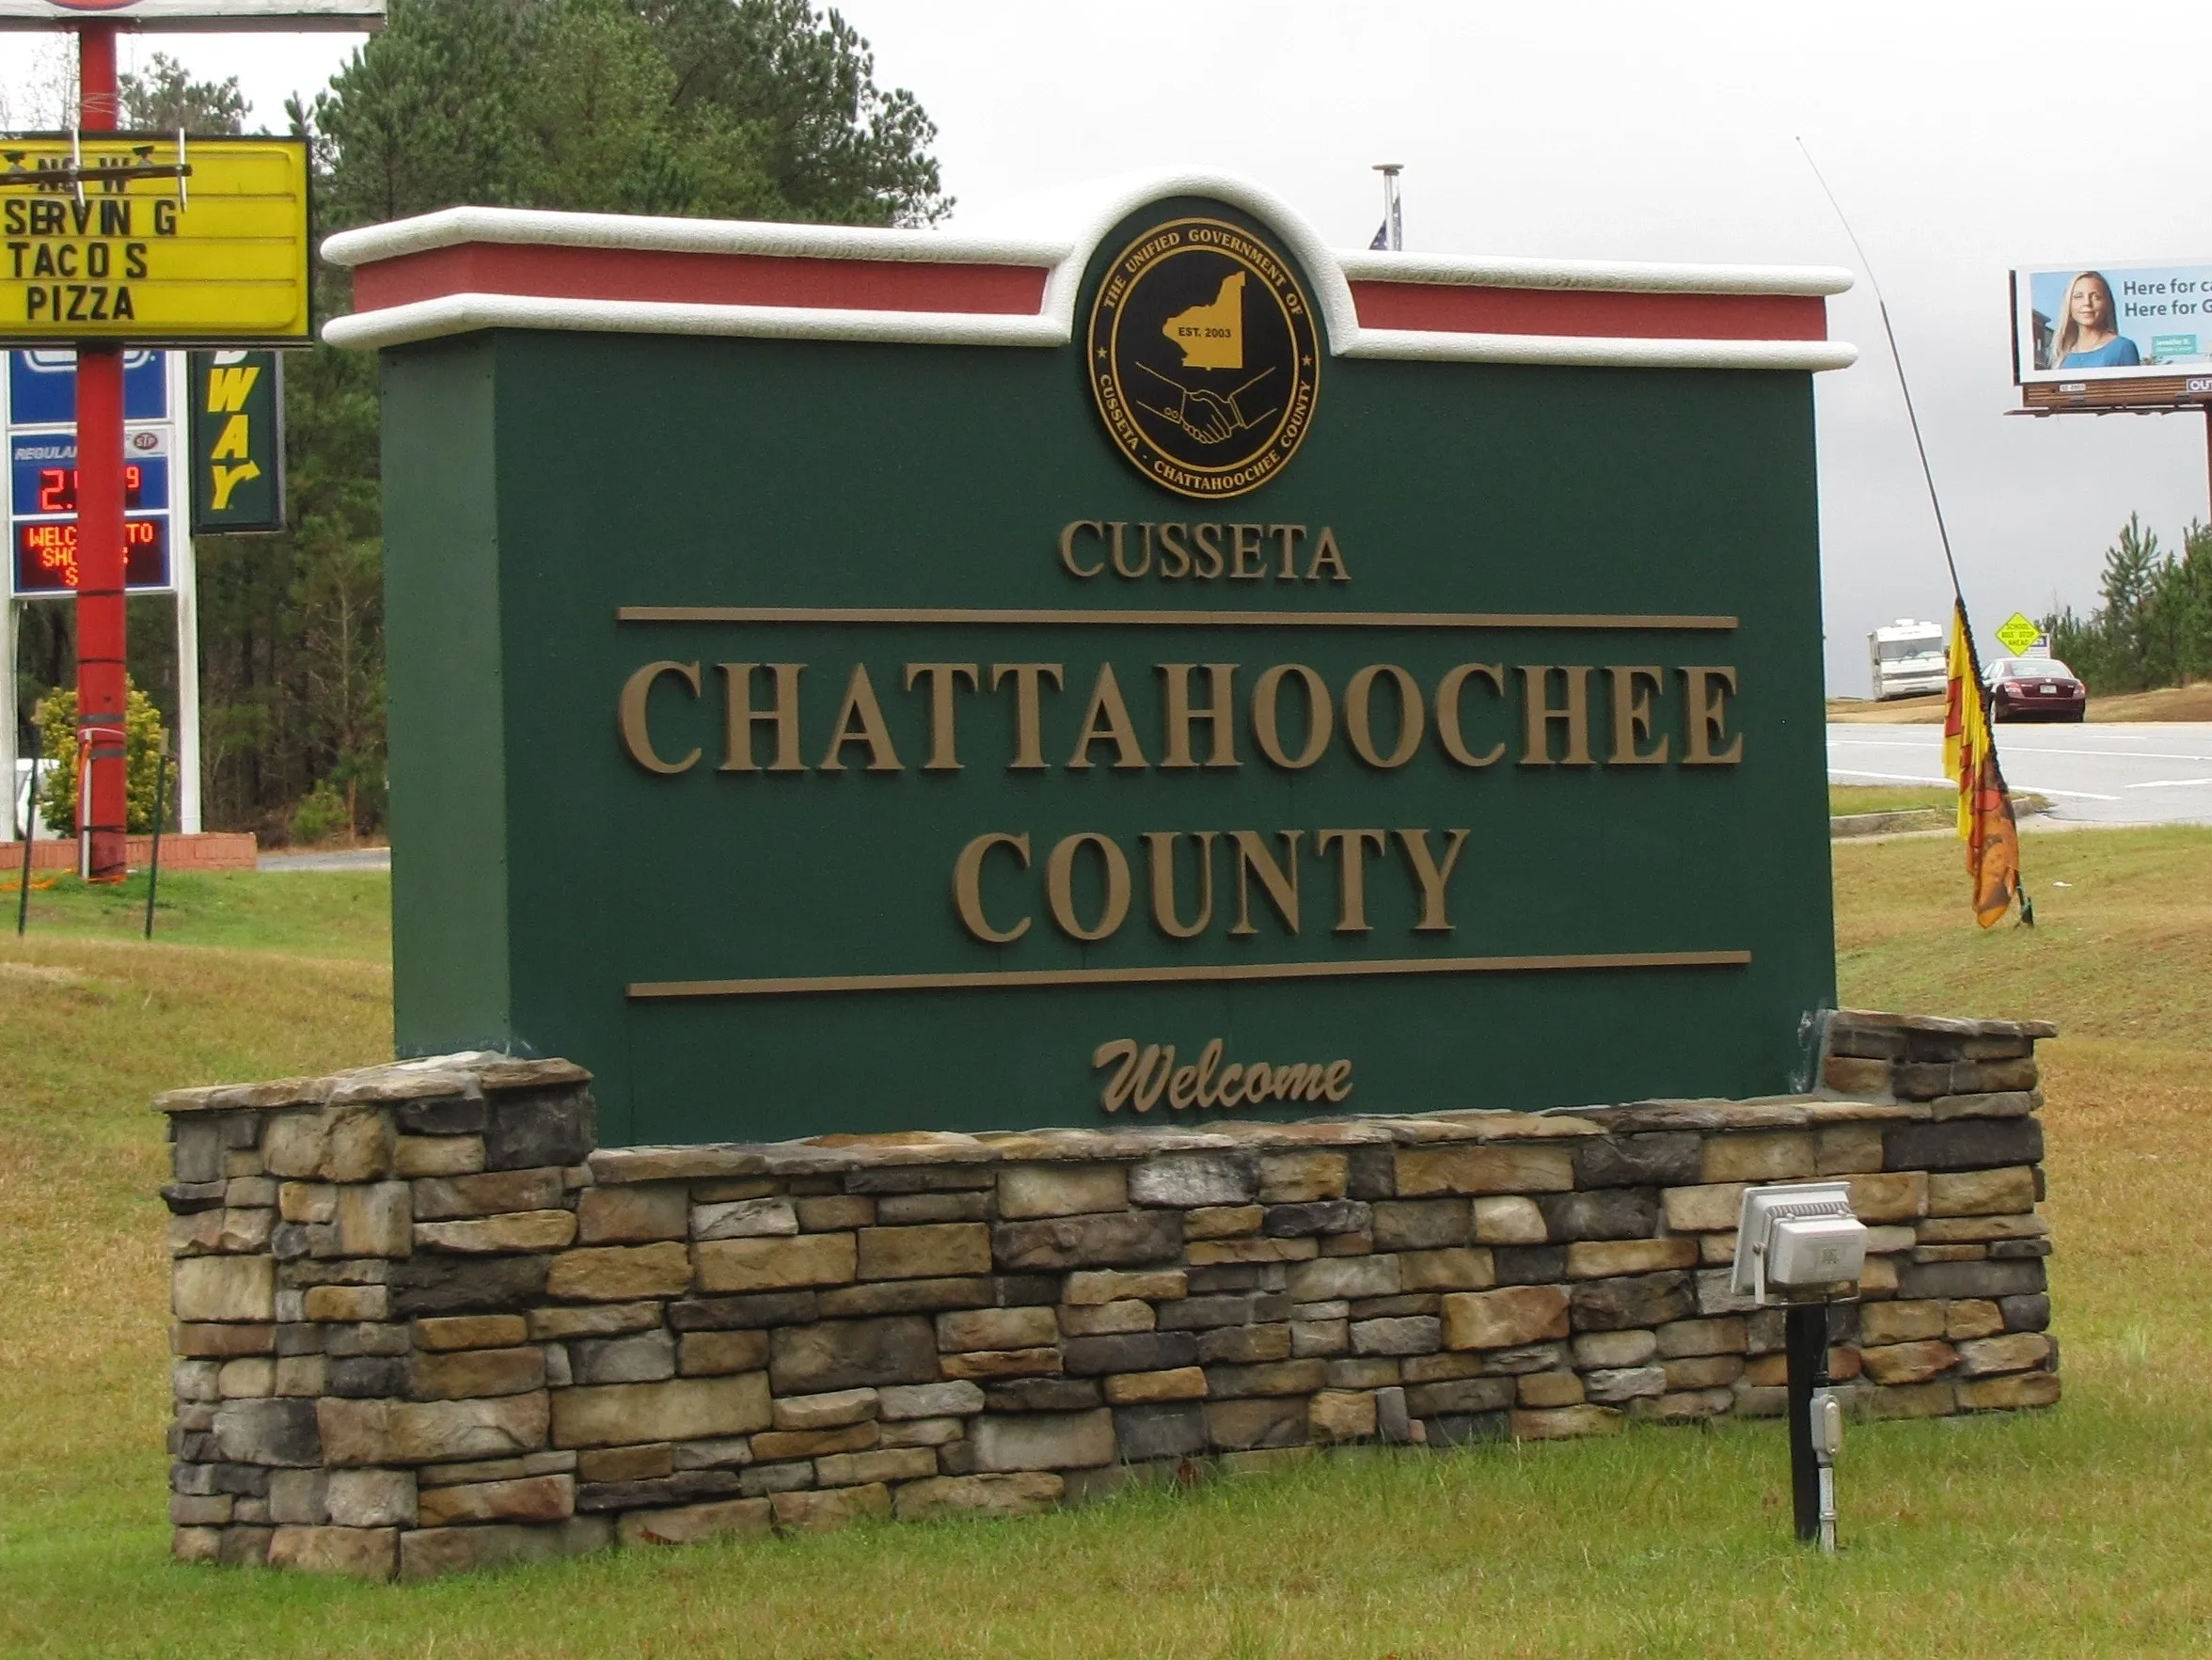 Chattahoochee County Health Department Cusseta